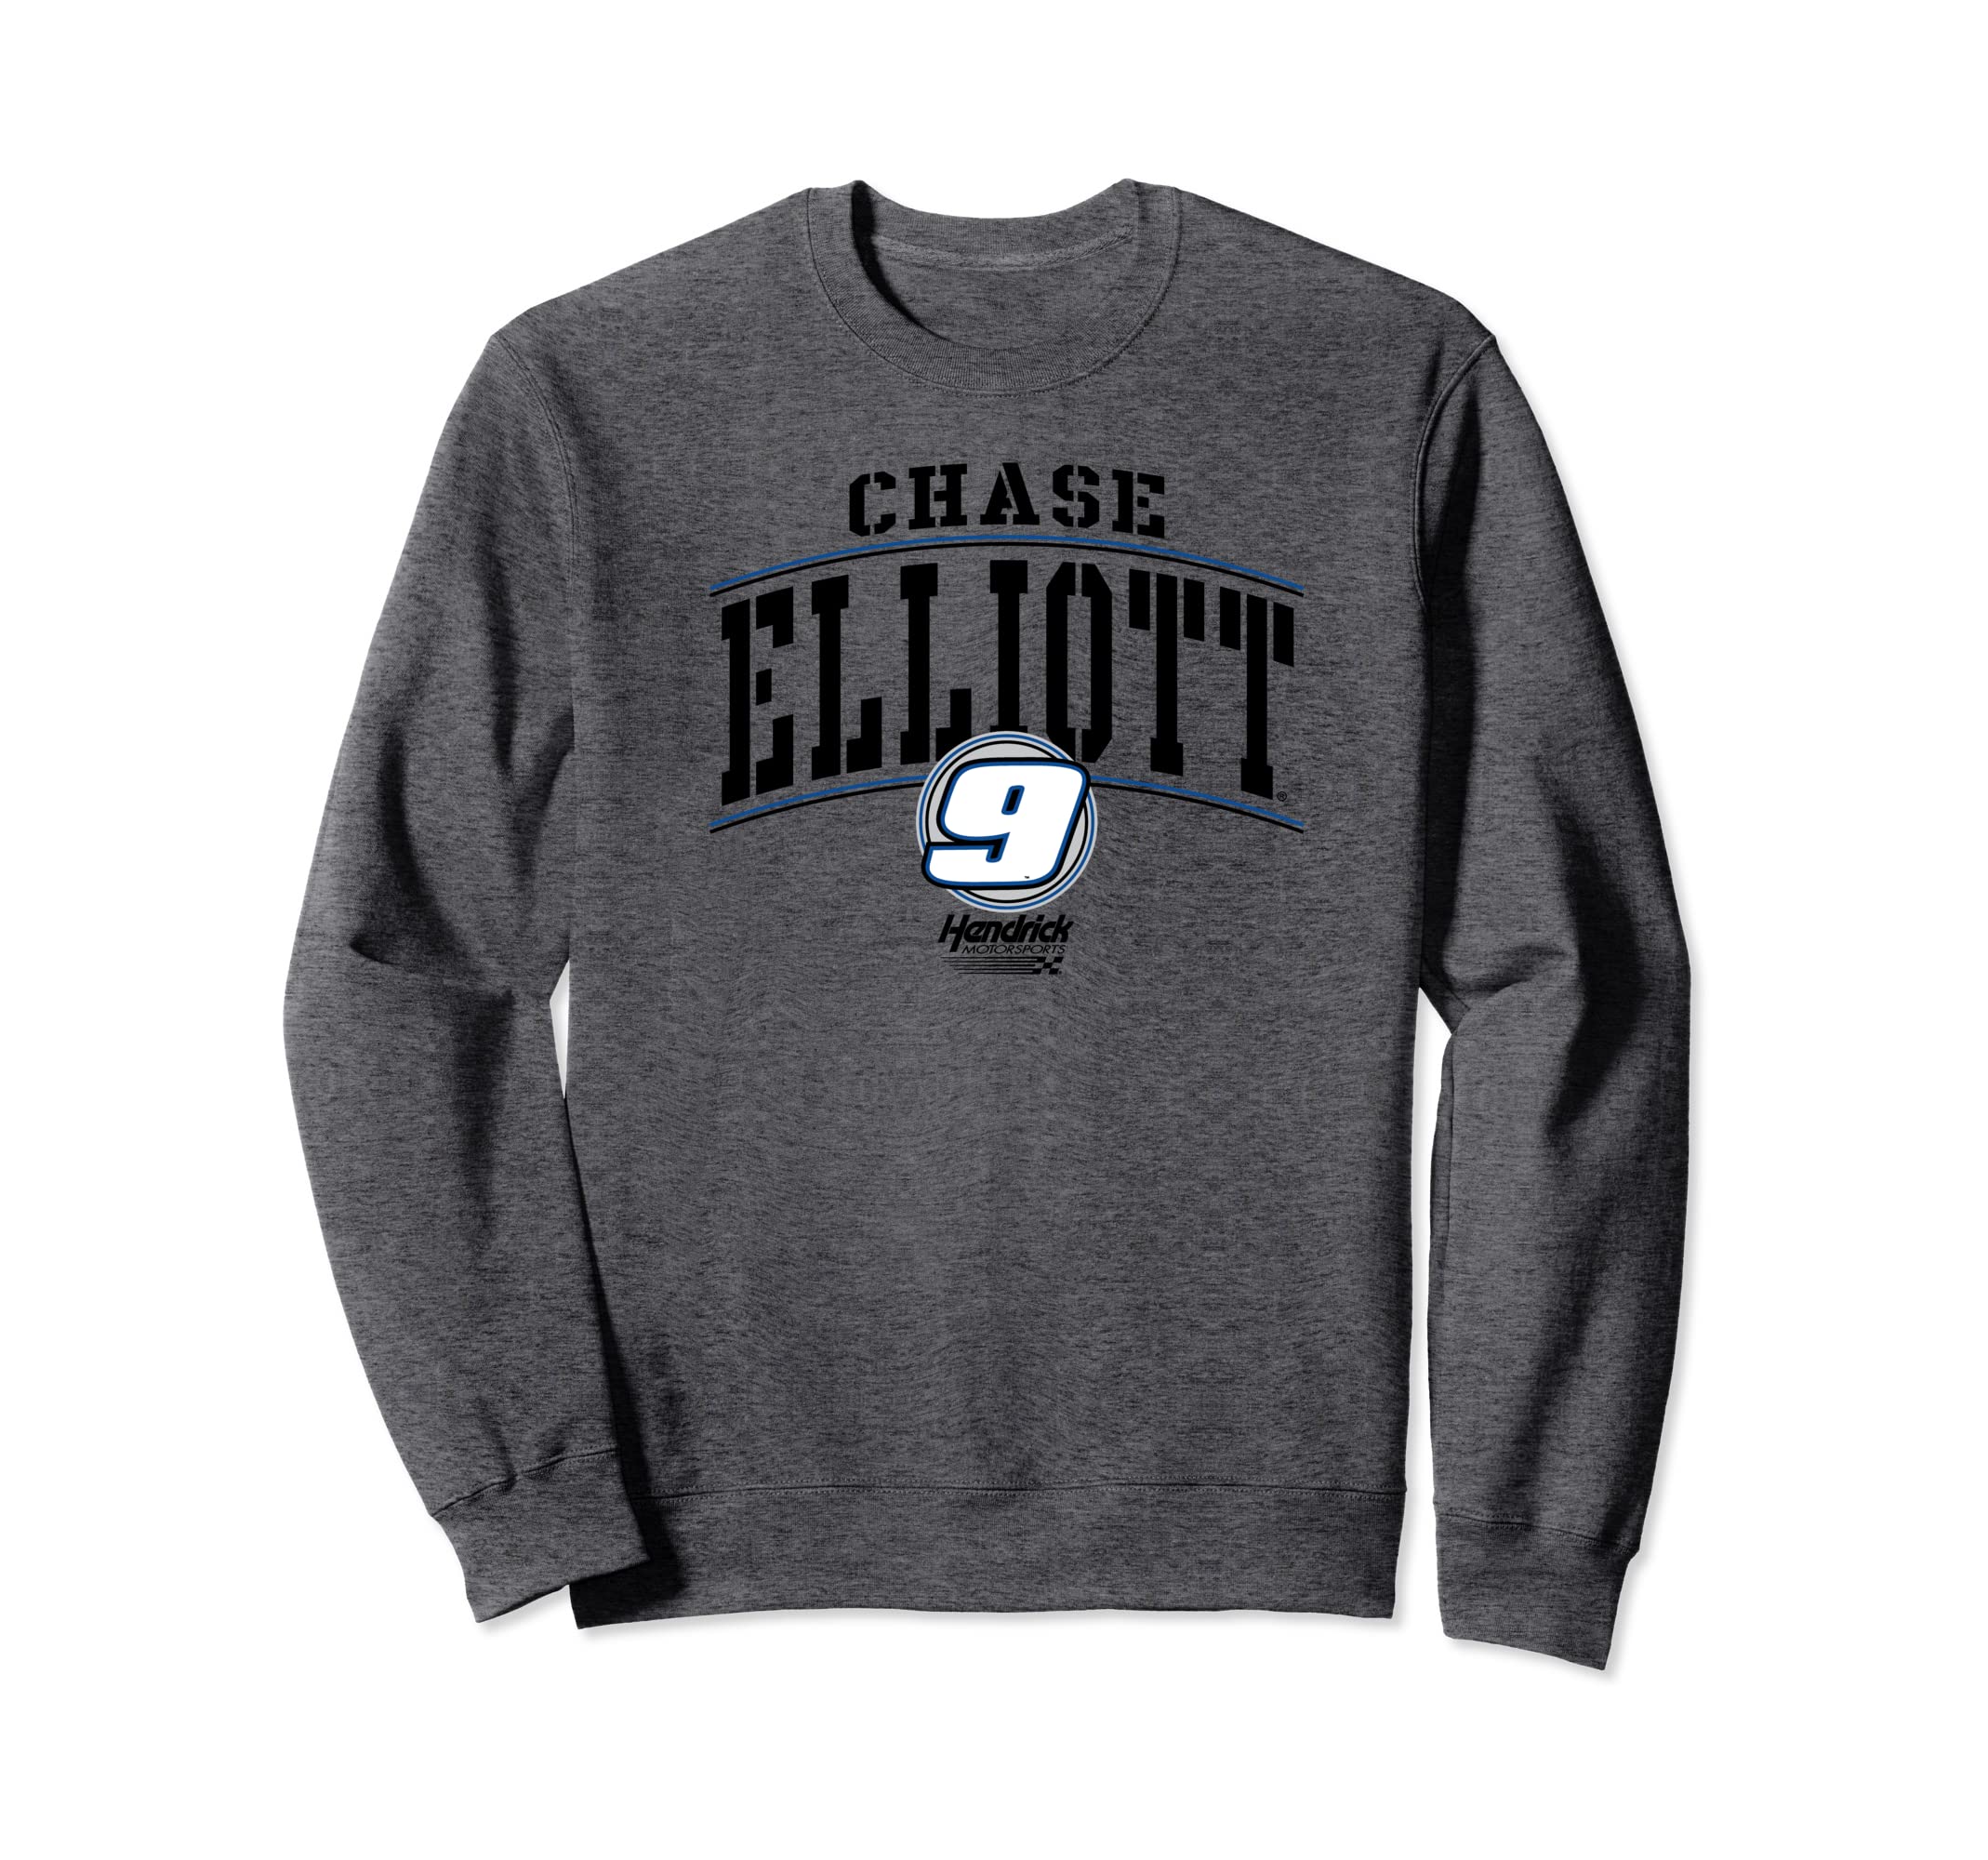 CHASE ELLIOTT - HENDRICK MOTORSPORTS - 9 Sweatshirt